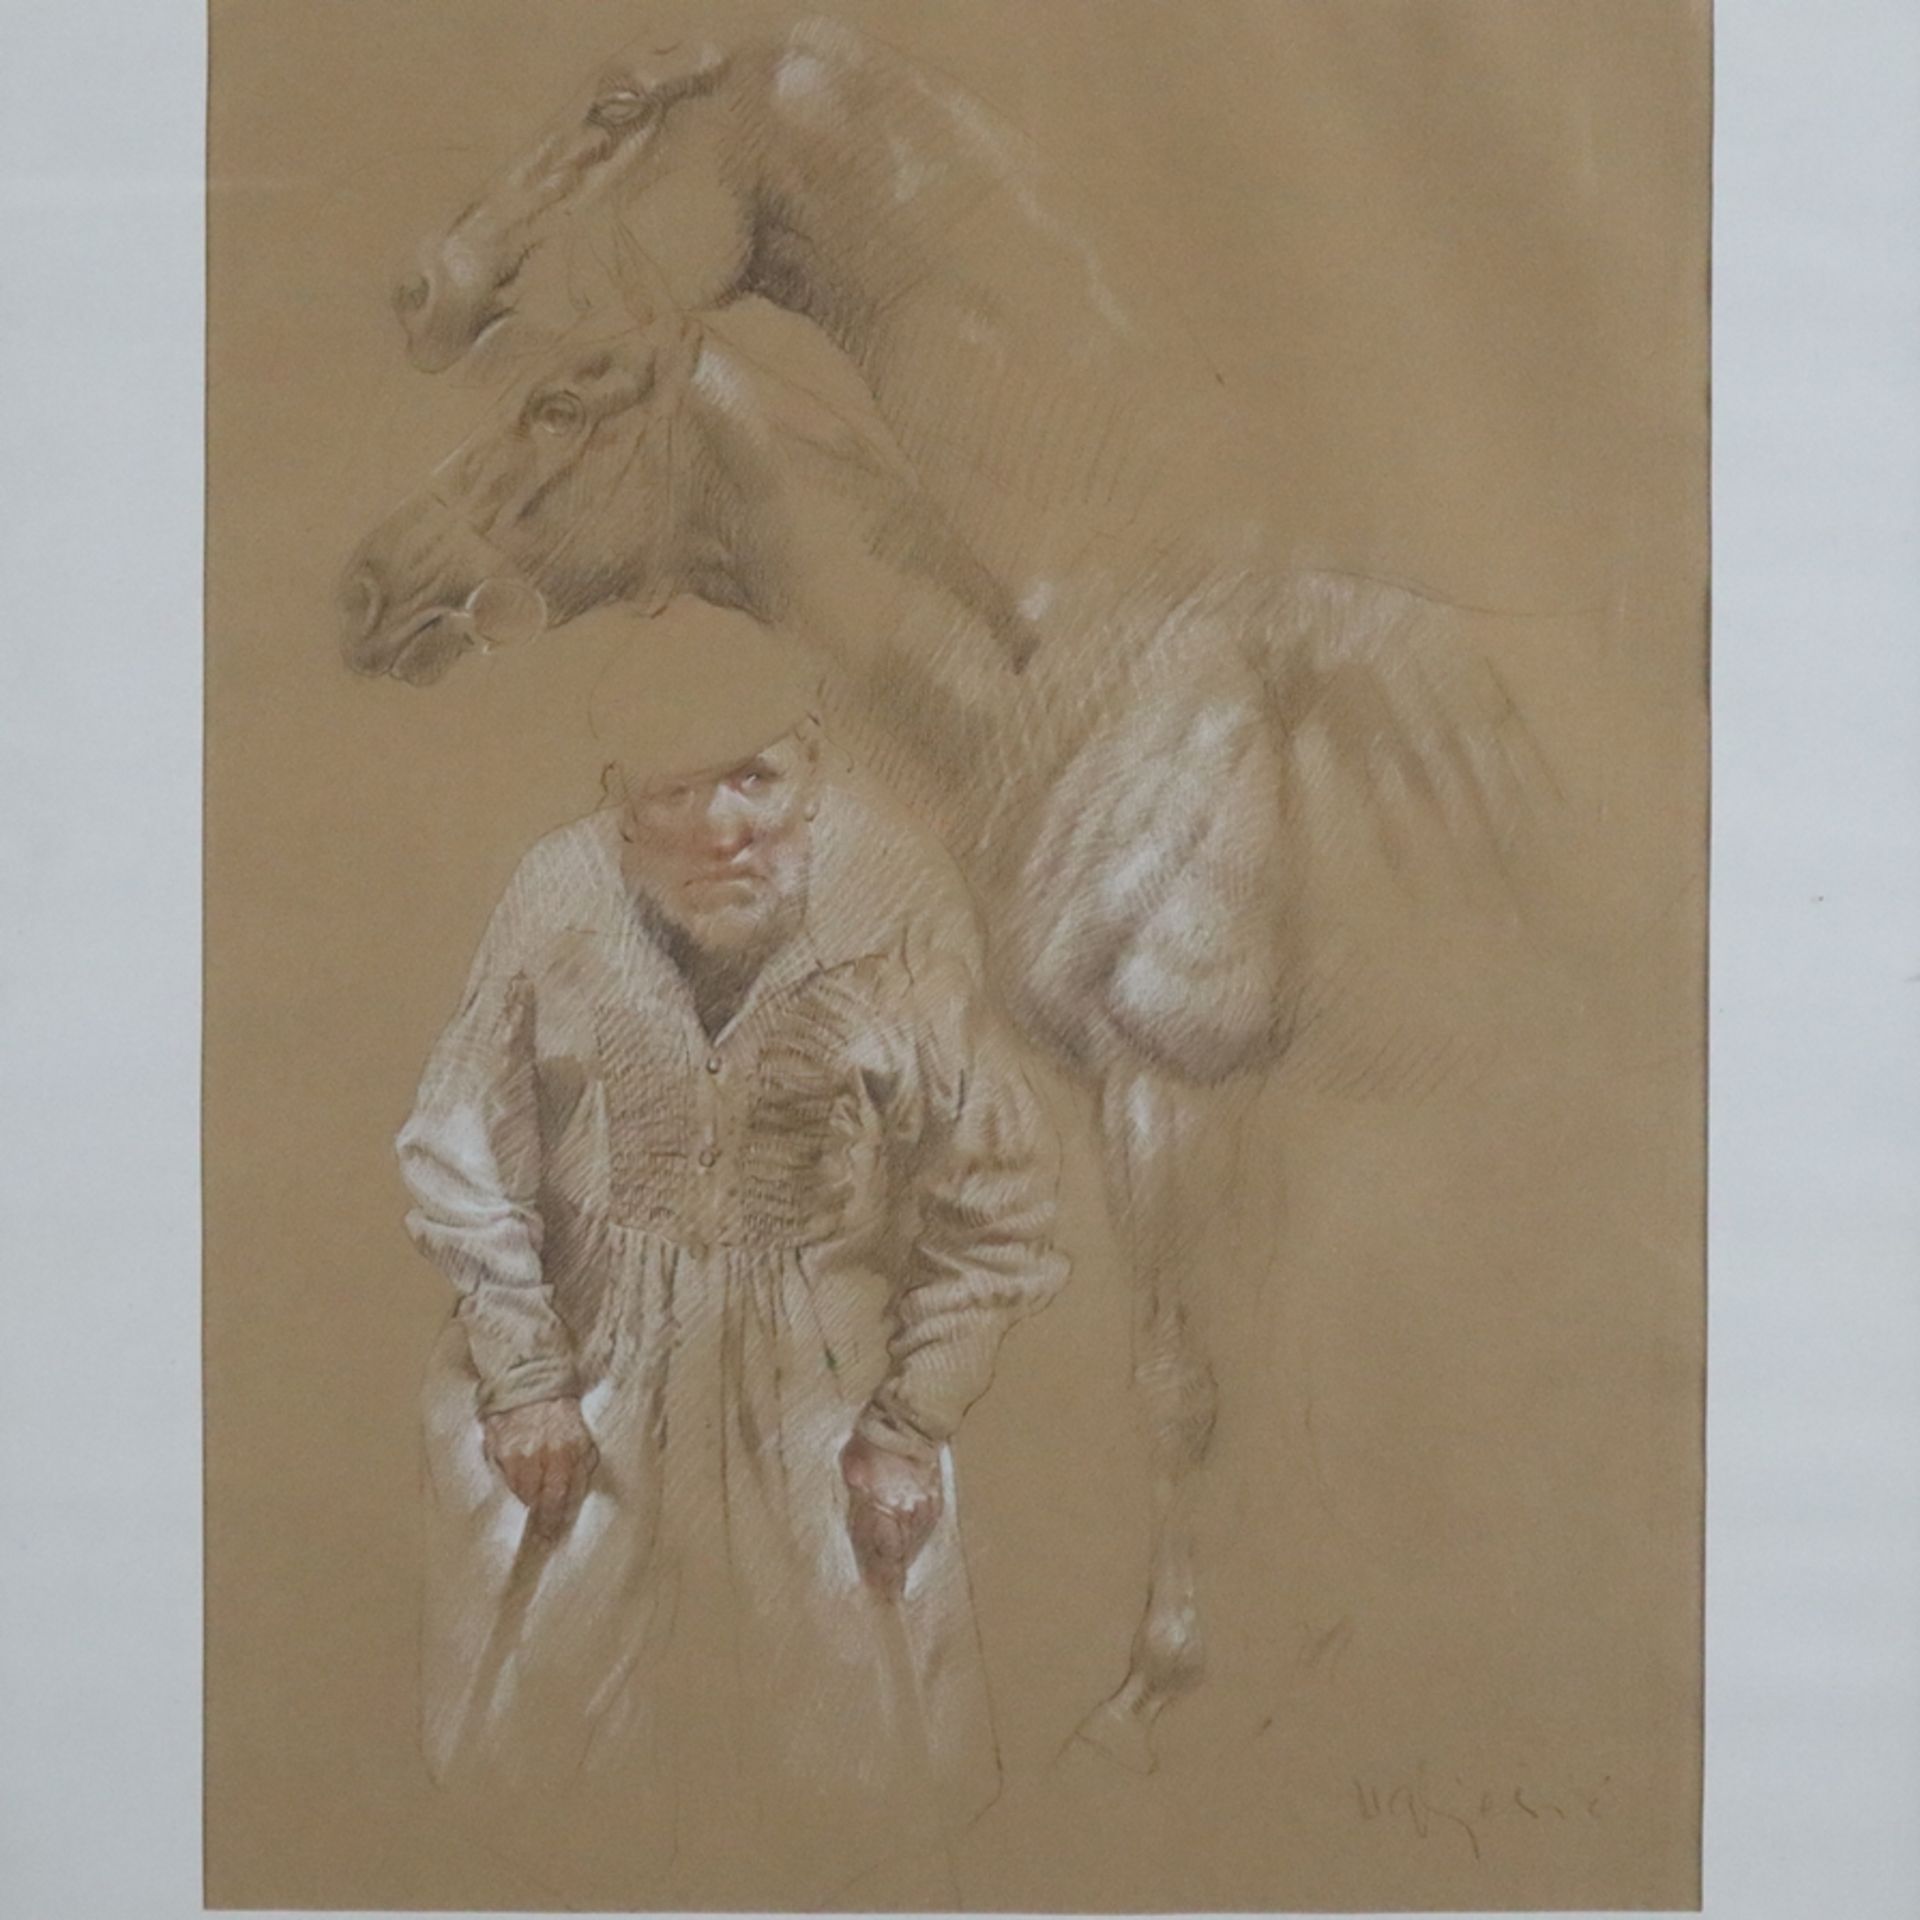 Ugljesic, Nebojsa (1940 Jastrebarsko - 1985) - Studienblatt mit zwei Pferdeköpfen und einem alten M